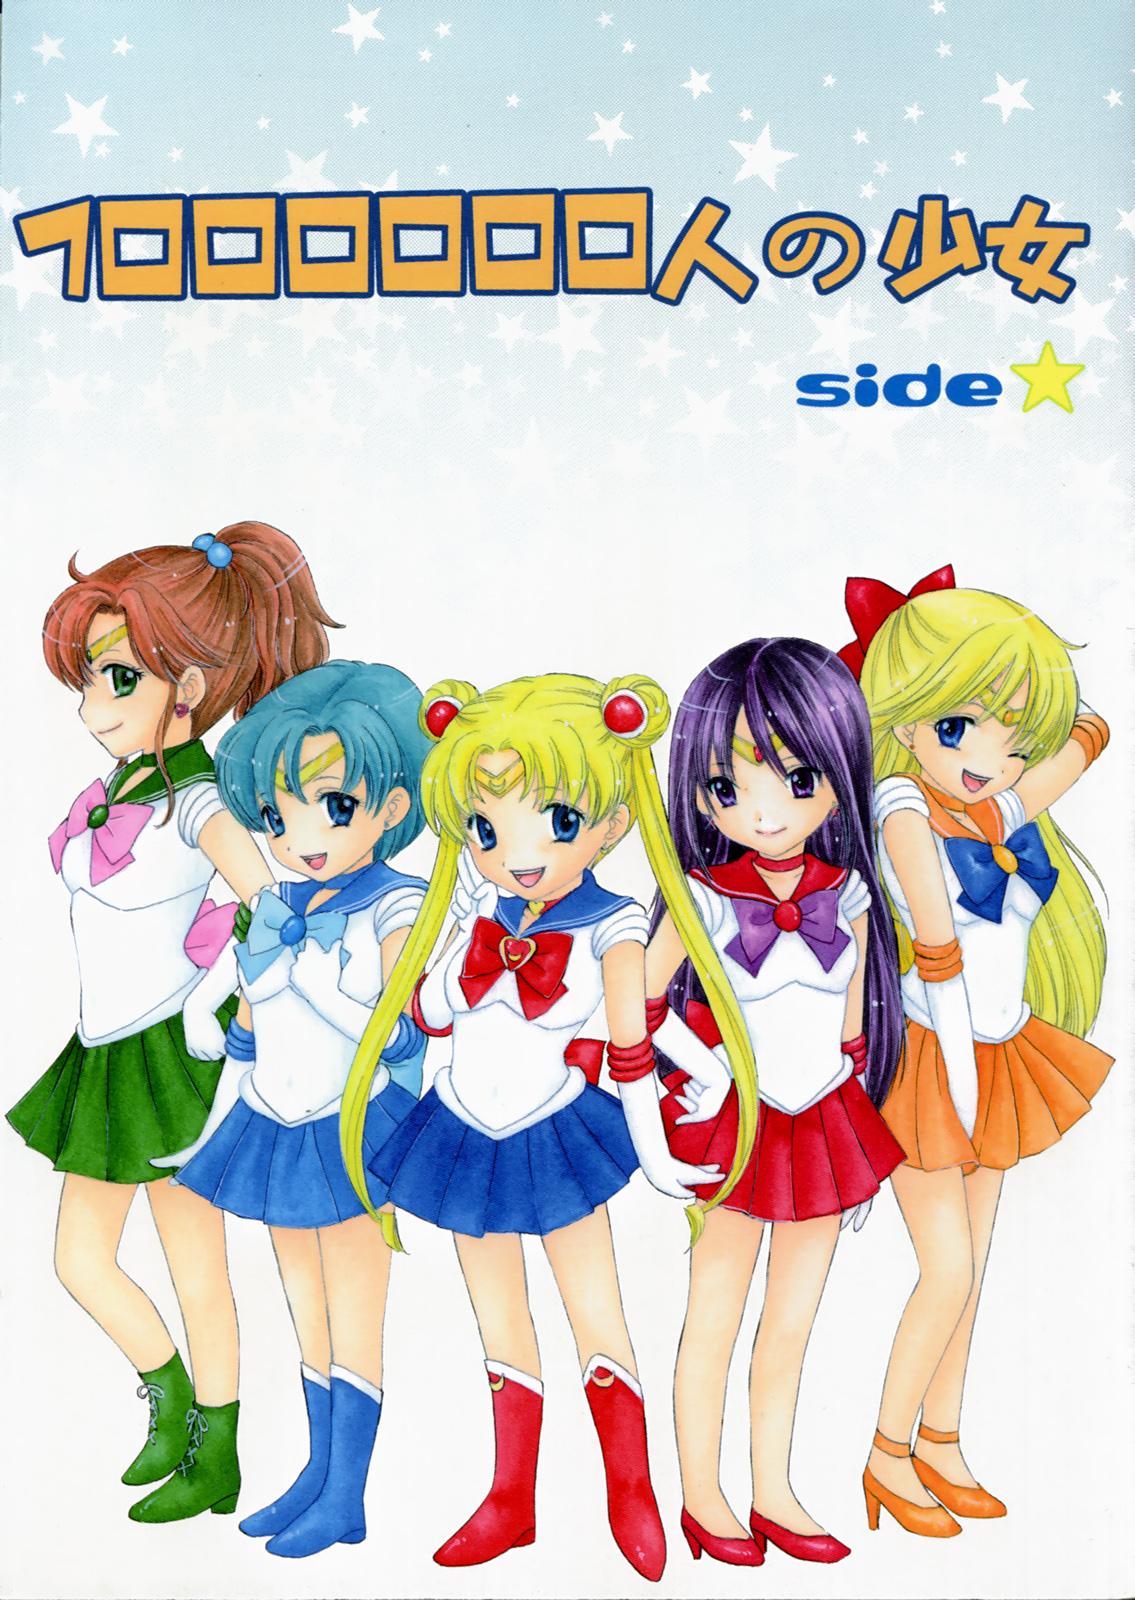 Gay Cumshots 1000000-nin no Shoujo side star - Sailor moon Bra - Picture 1